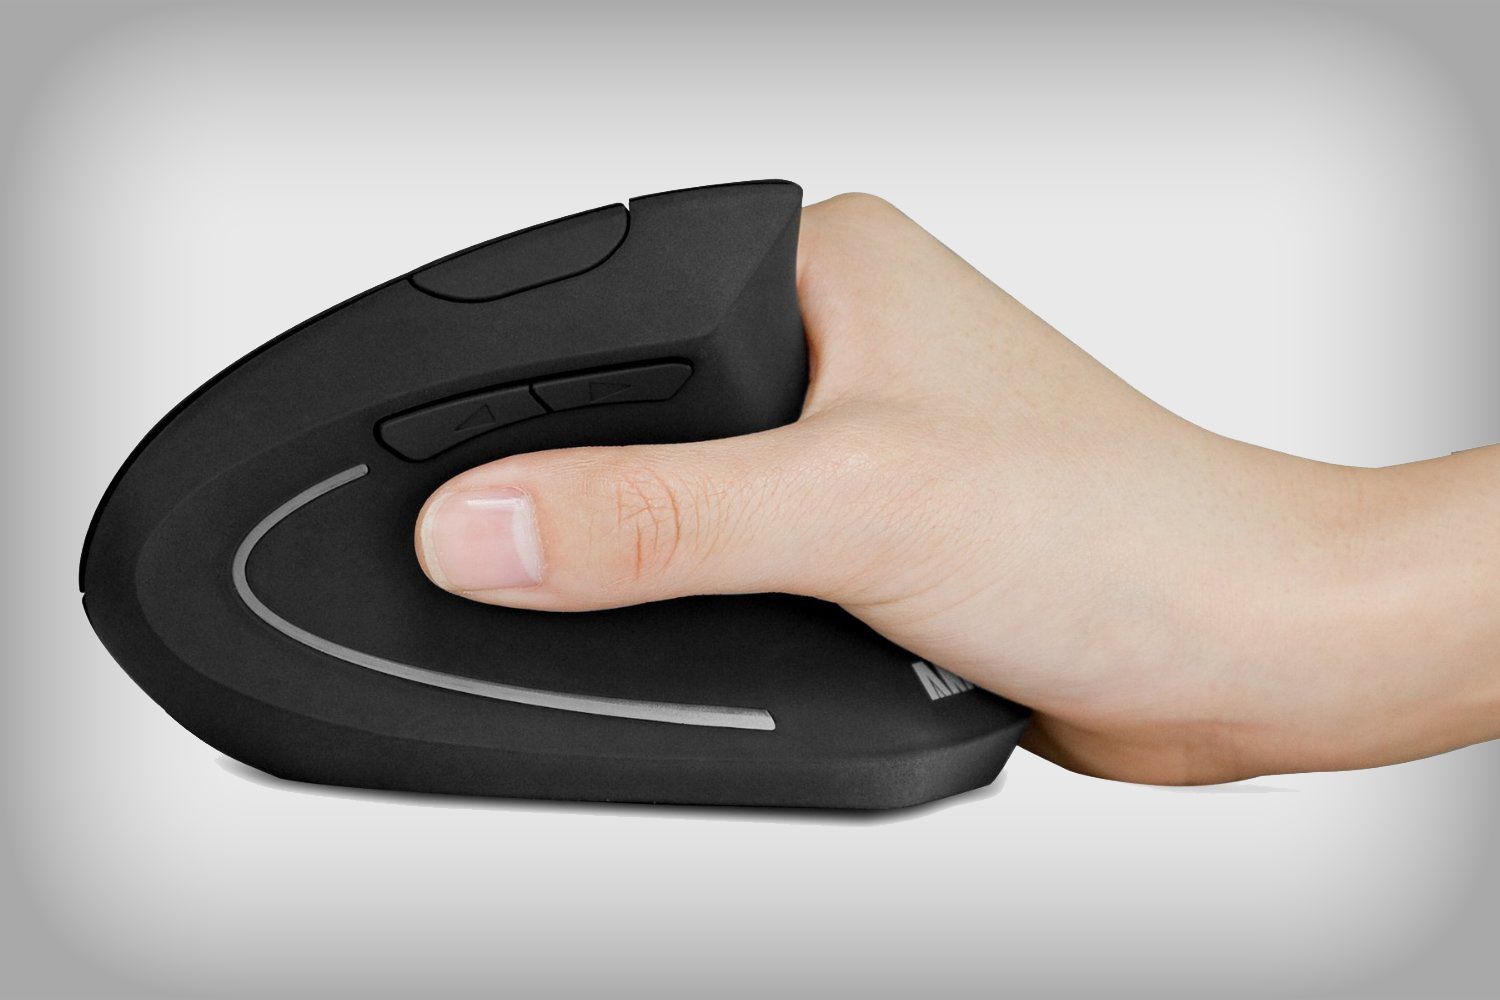 Logitech Lift Test: First-class ergonomic mouse for left-handers